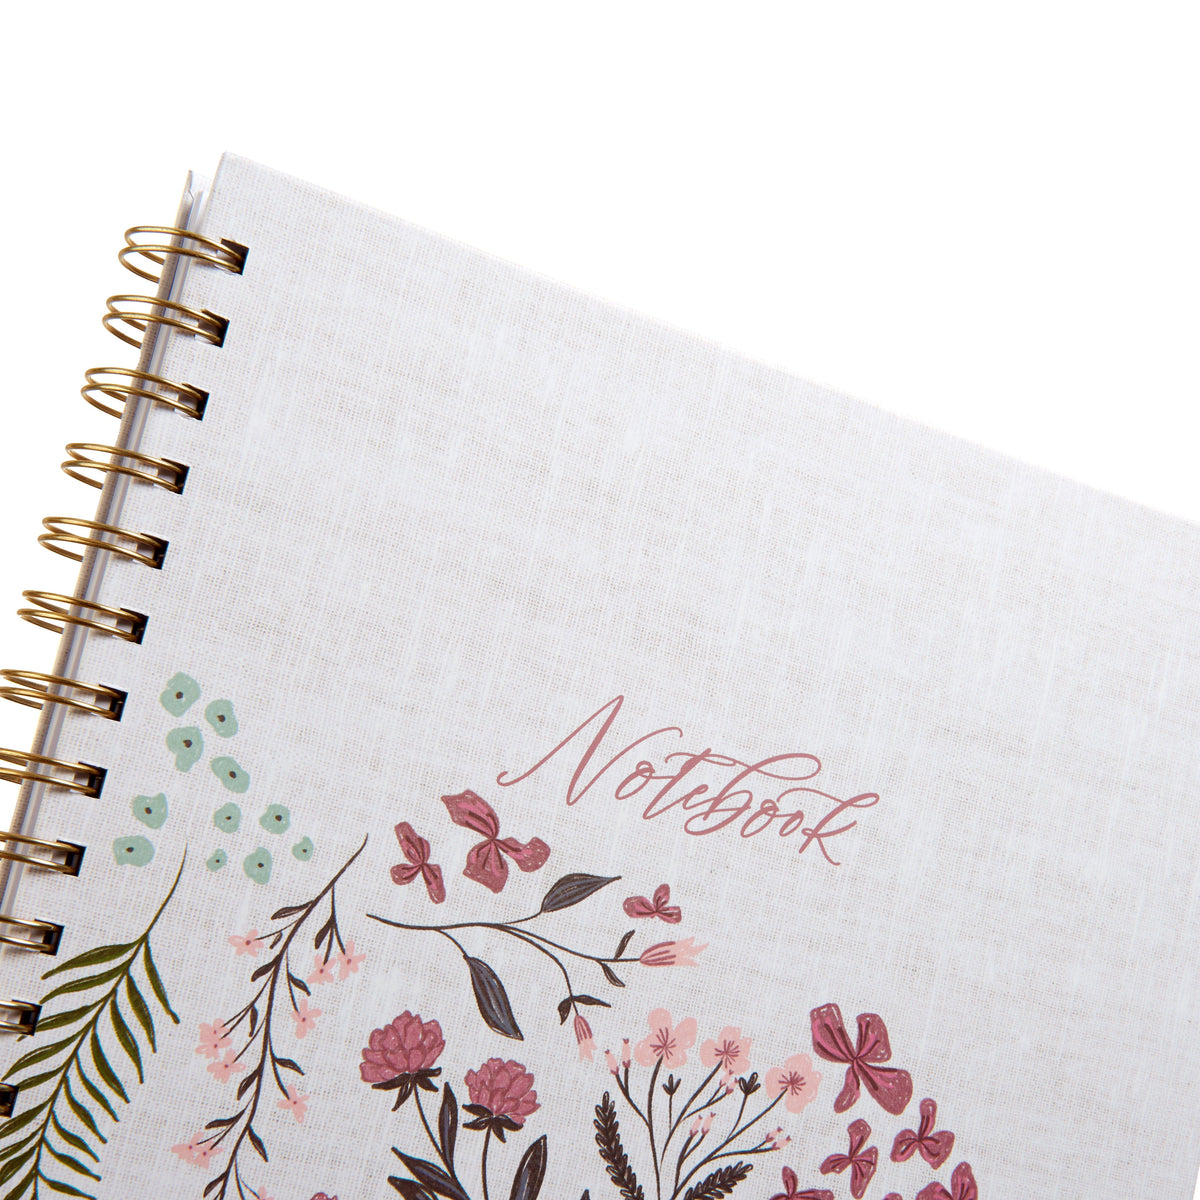 Wildflower Notebook Gartner Studios Notebooks 94072